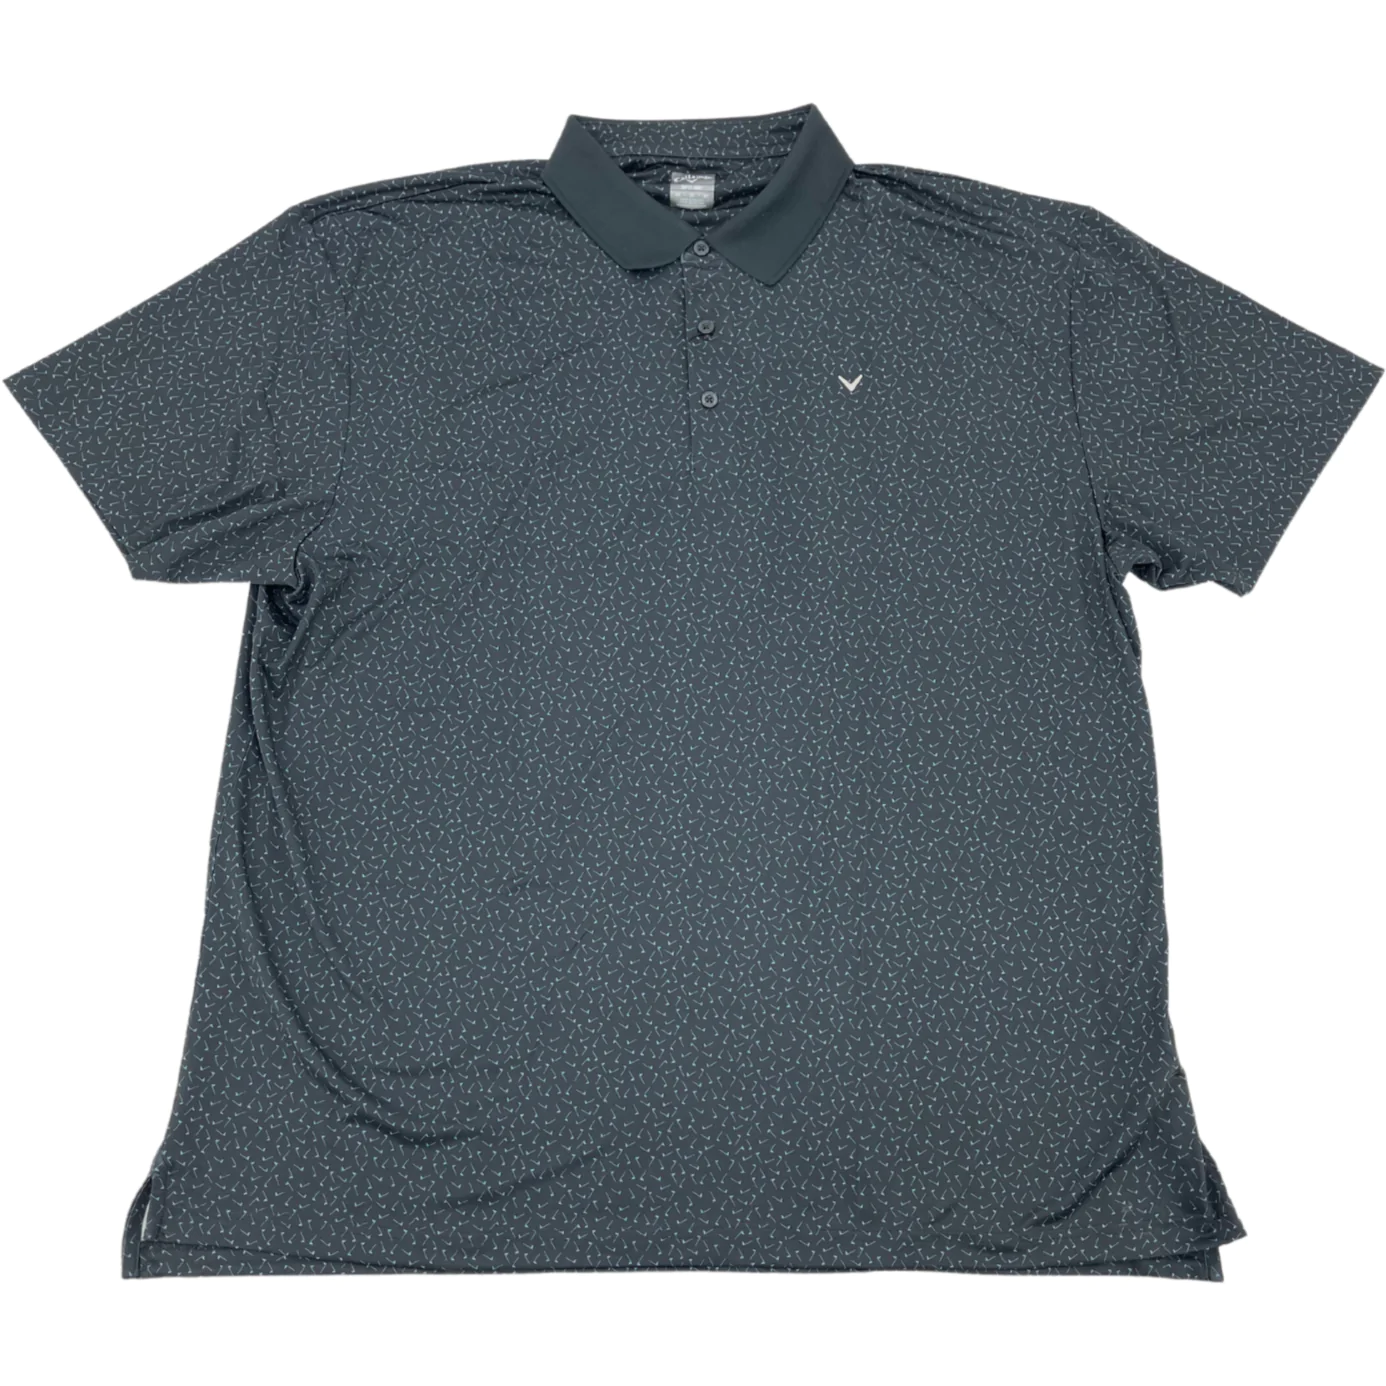 Callaway Men’s Golf Shirt / Dark Grey with Flag Pattern / Various Sizes ...